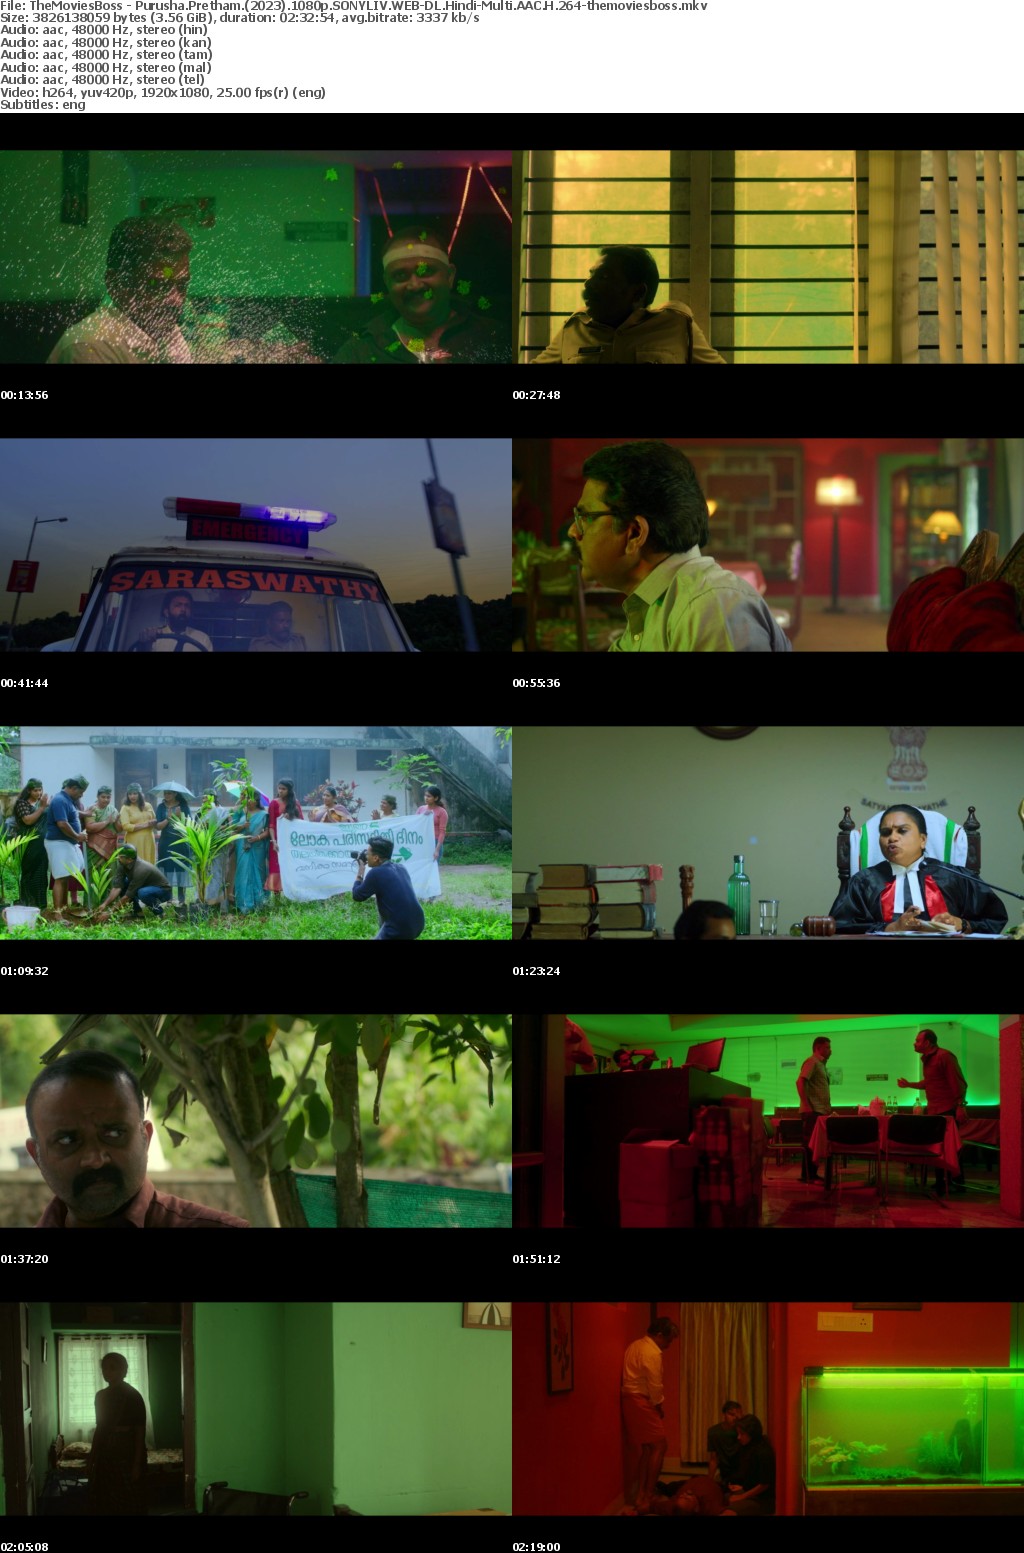 Purusha Pretham (2023) 1080p SONYLIV WEB-DL Hindi-Multi AAC H 264-themoviesboss